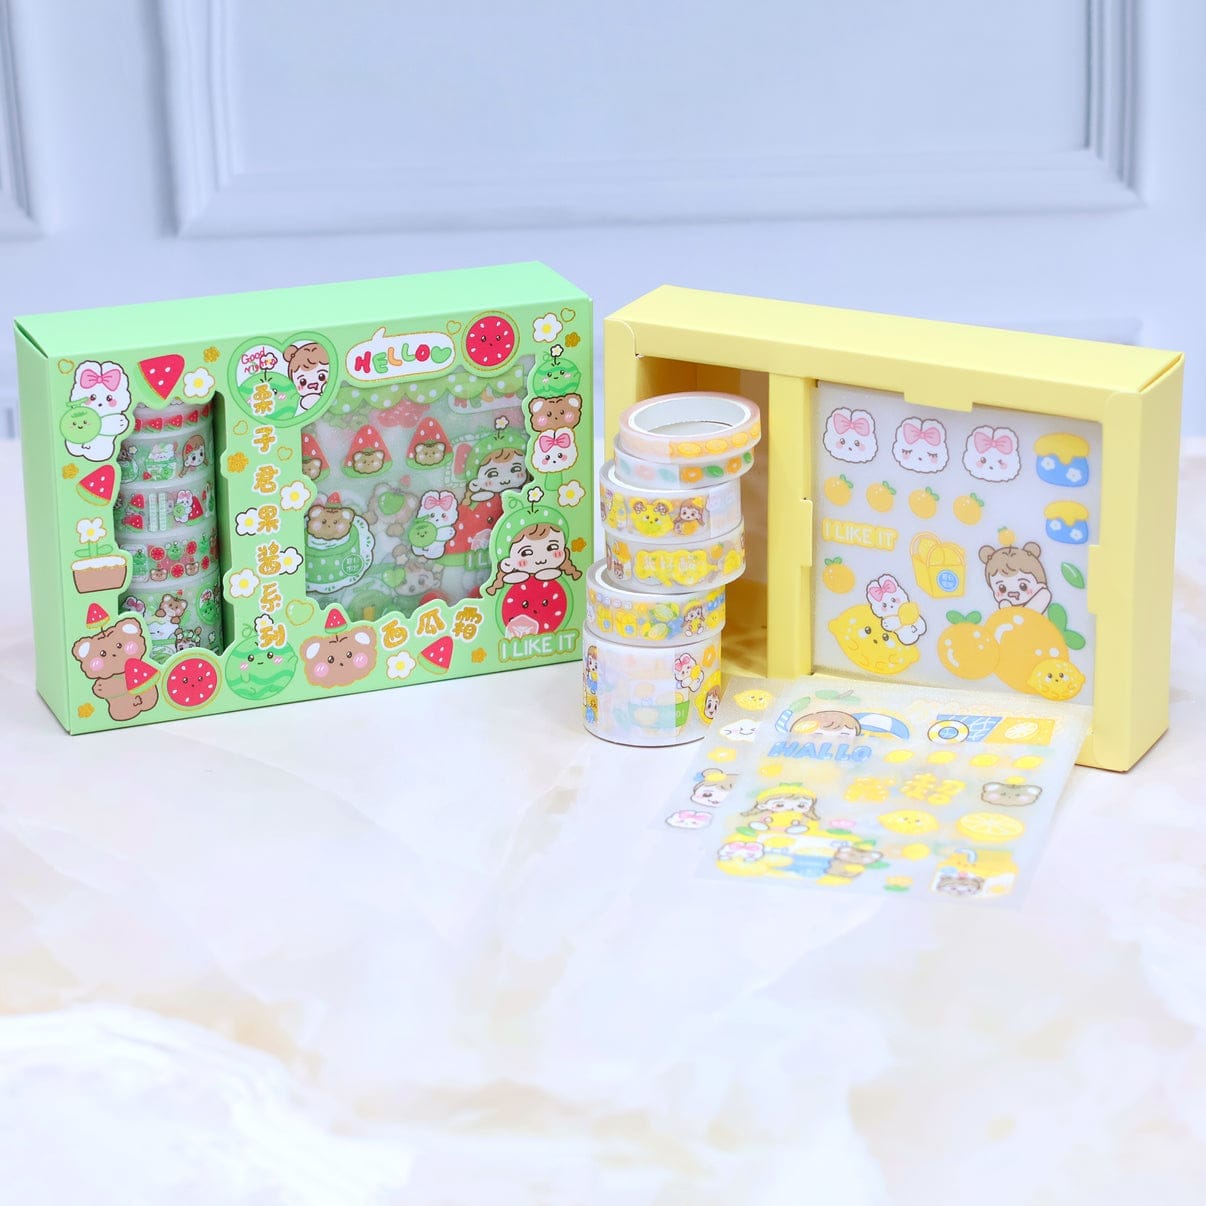 Bright International Washi Tape Kawaii Washi Tape Roll Set of 6 with Stickers Set of 6  I Scrapbooking and journaling Kit